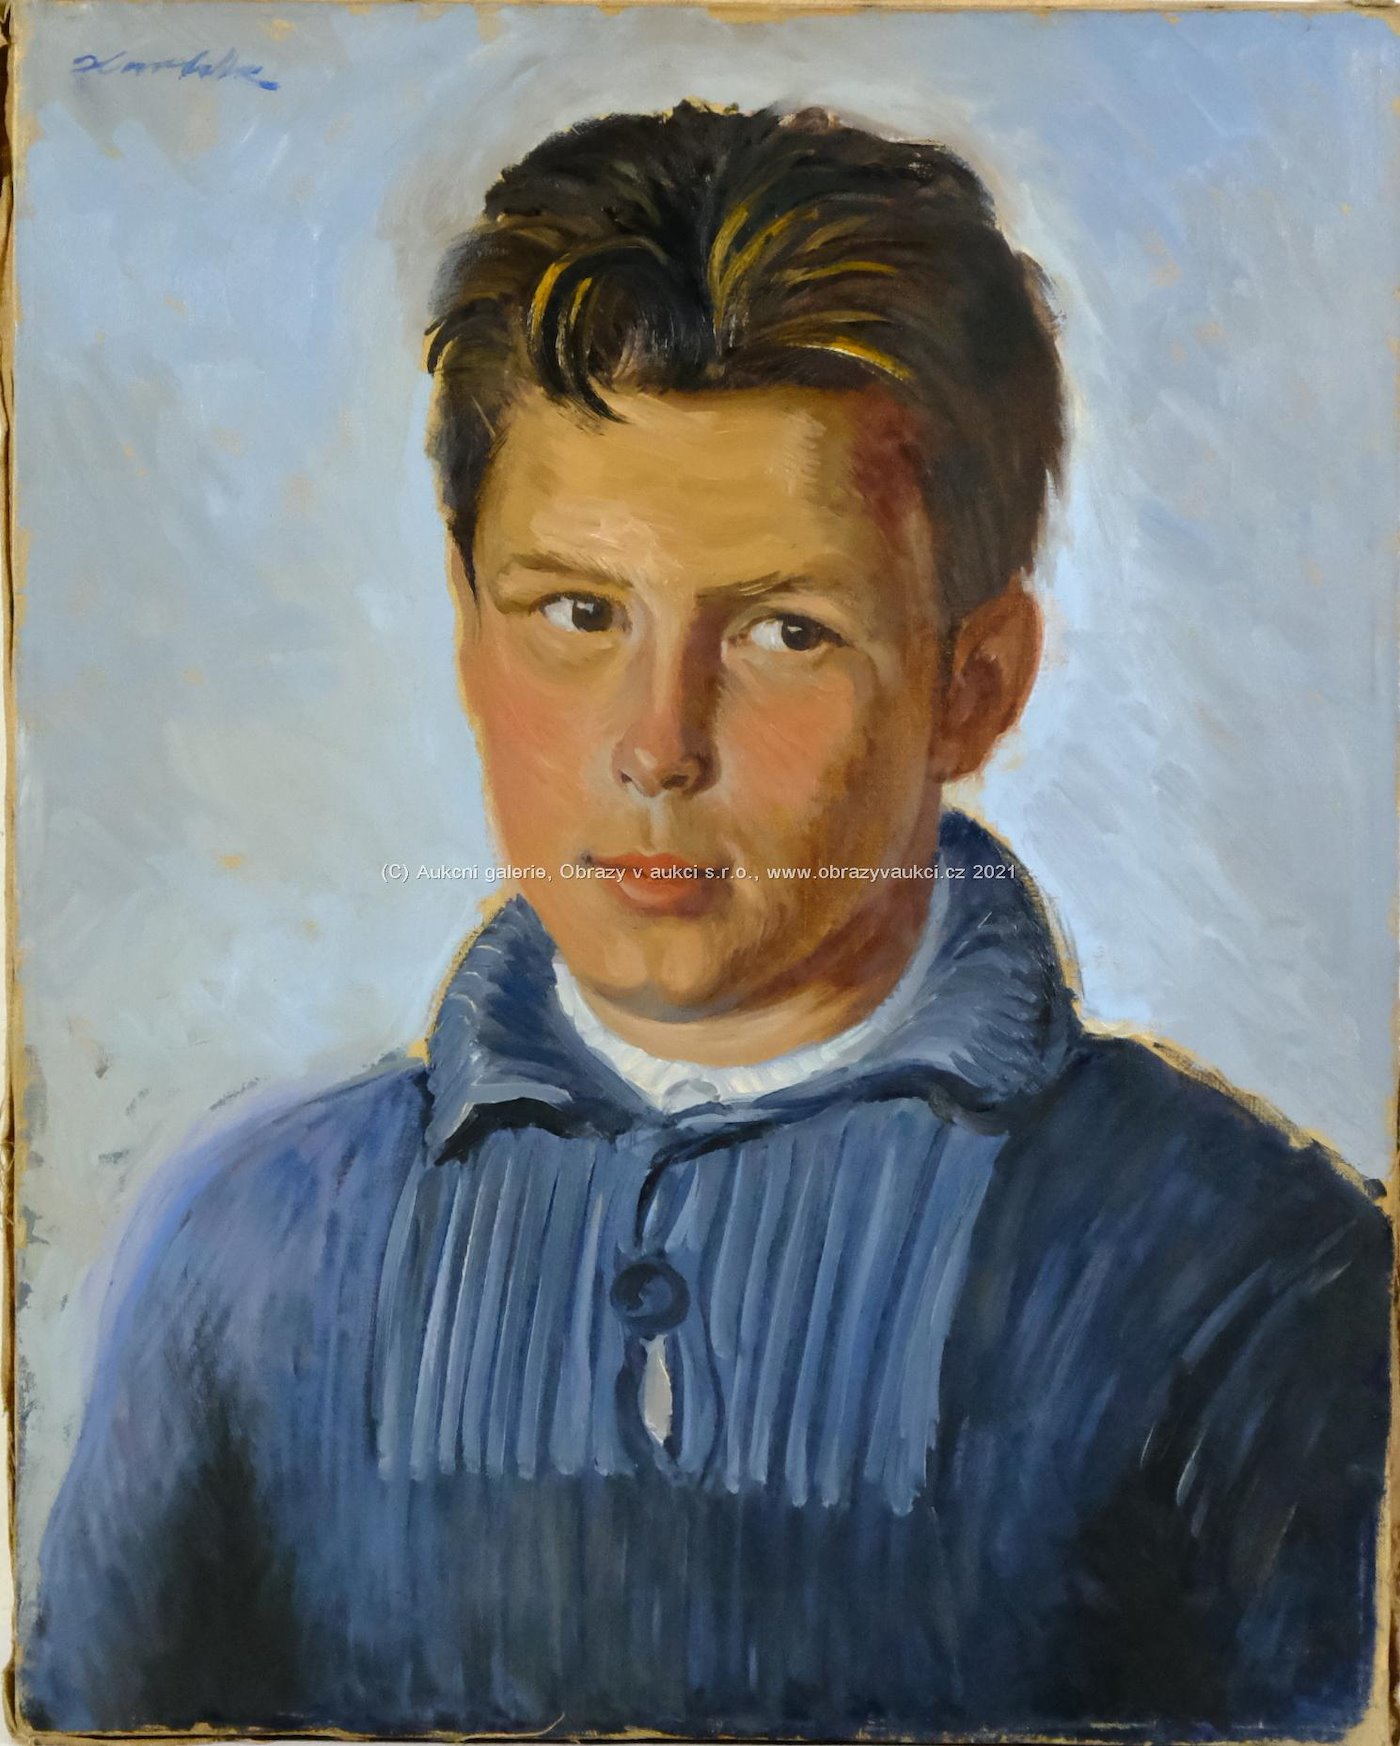 Jan Havlík - Portrét chlapce